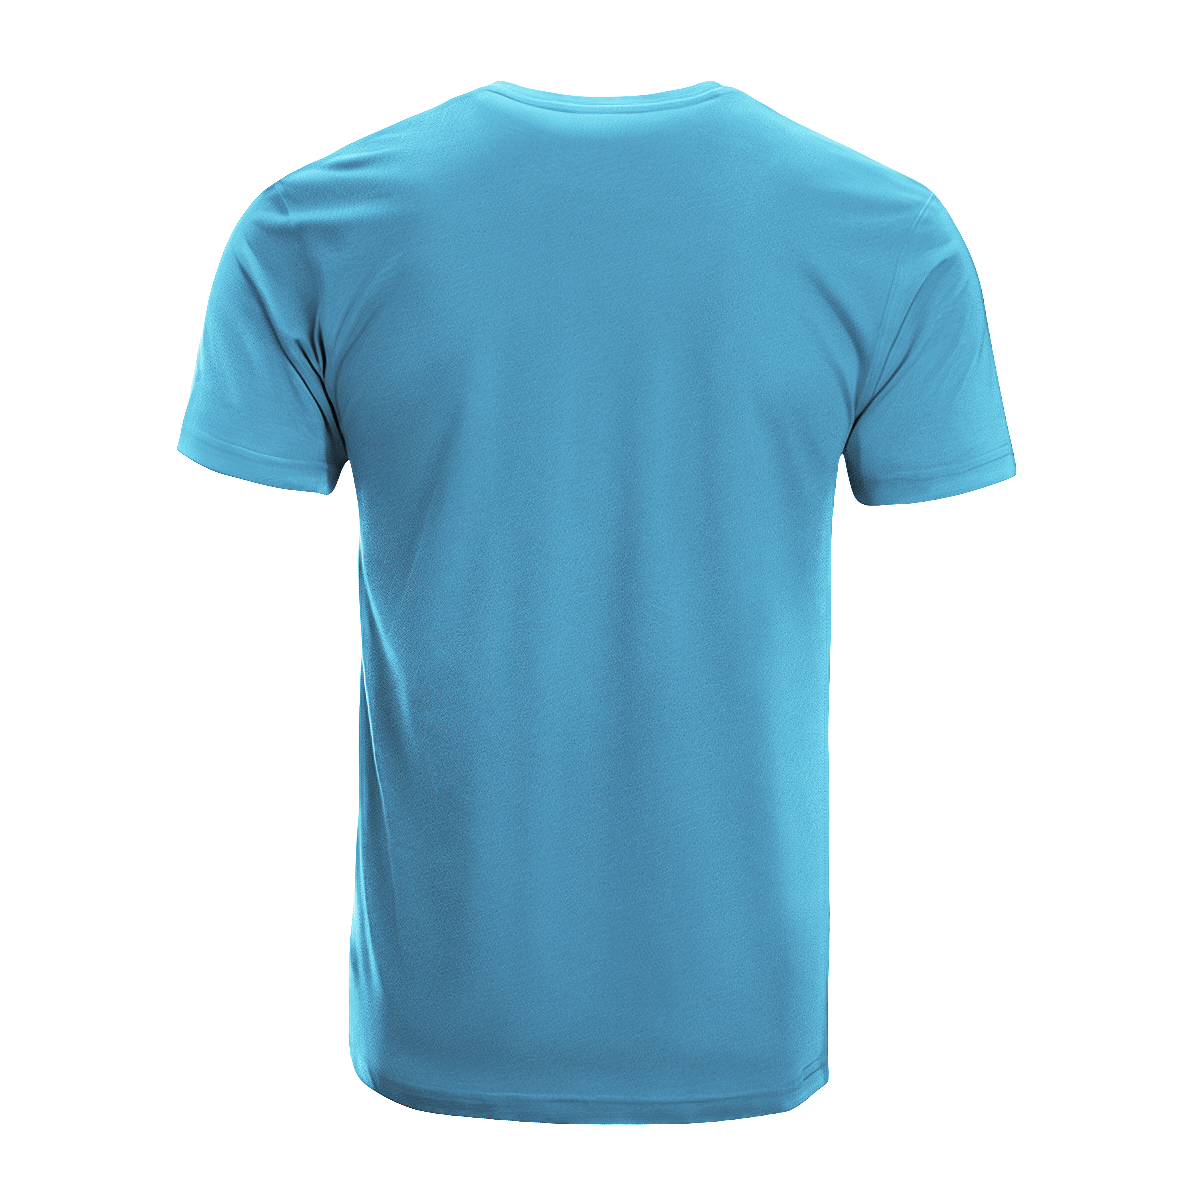 Mitchell Tartan Crest T-shirt - I'm not yelling style